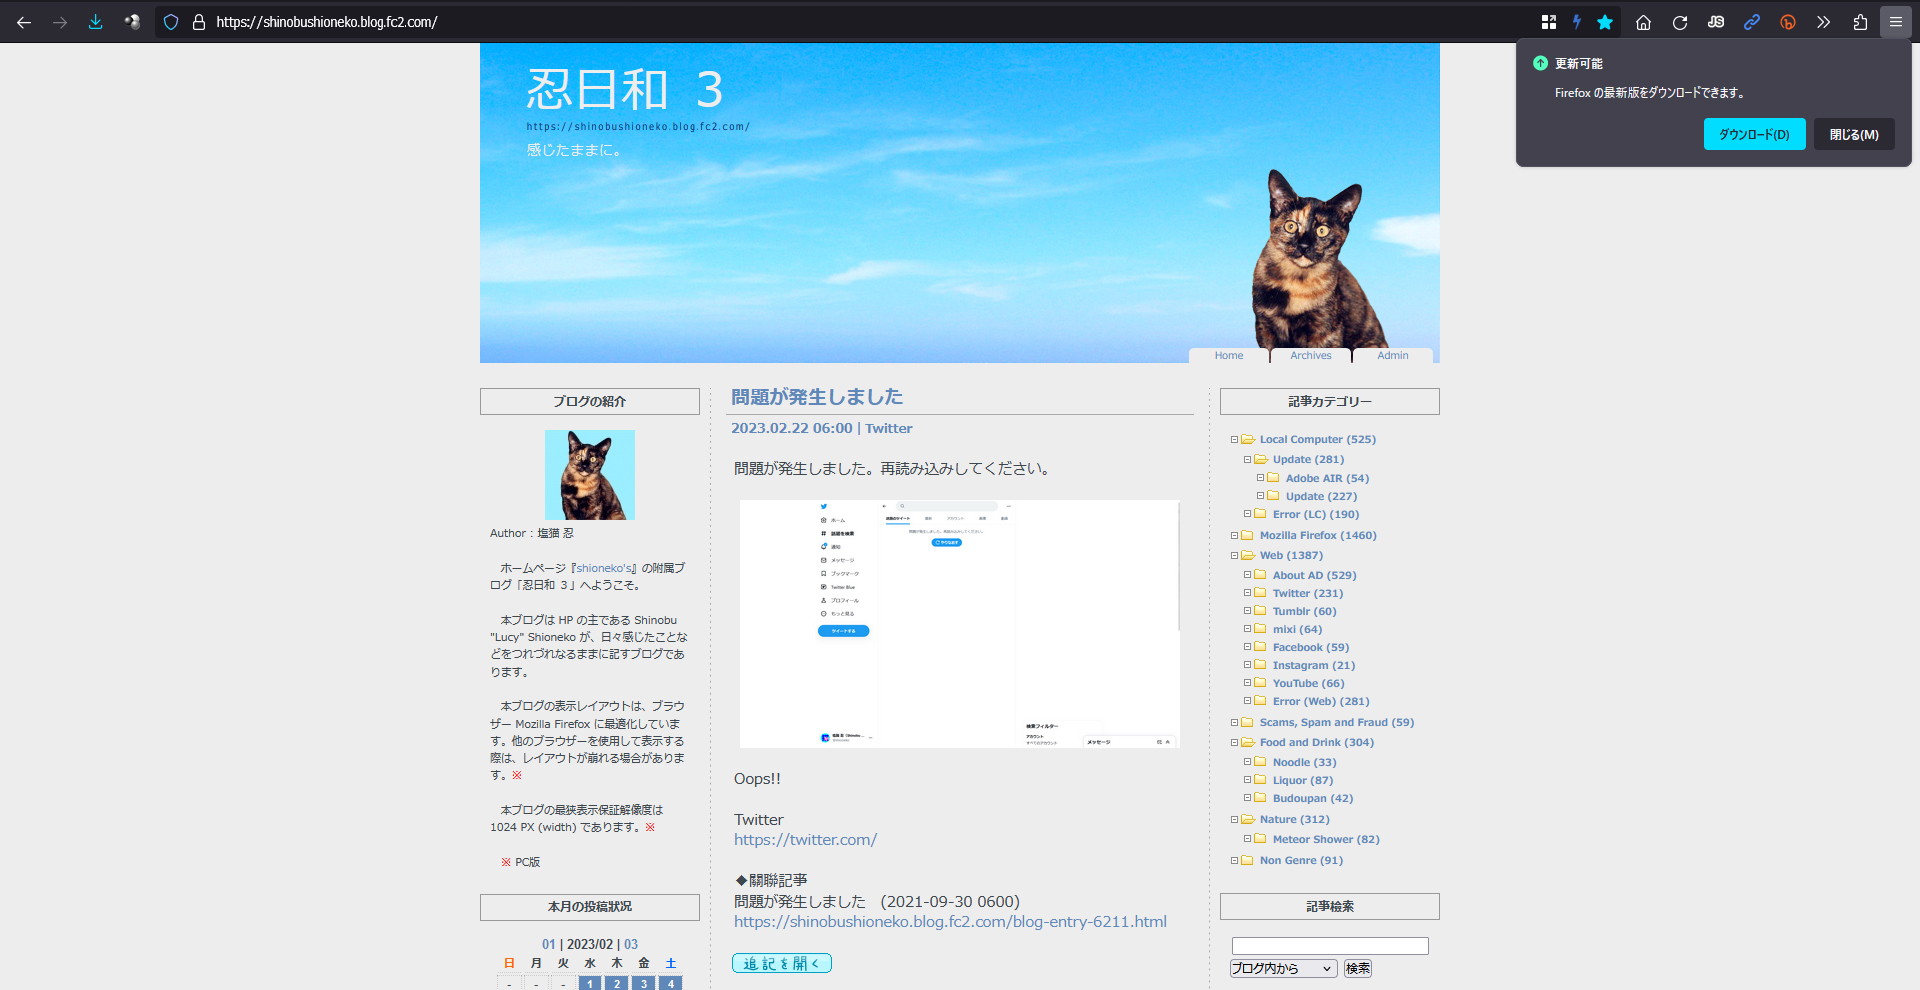 Mozilla Firefox 111.0 Beta 4